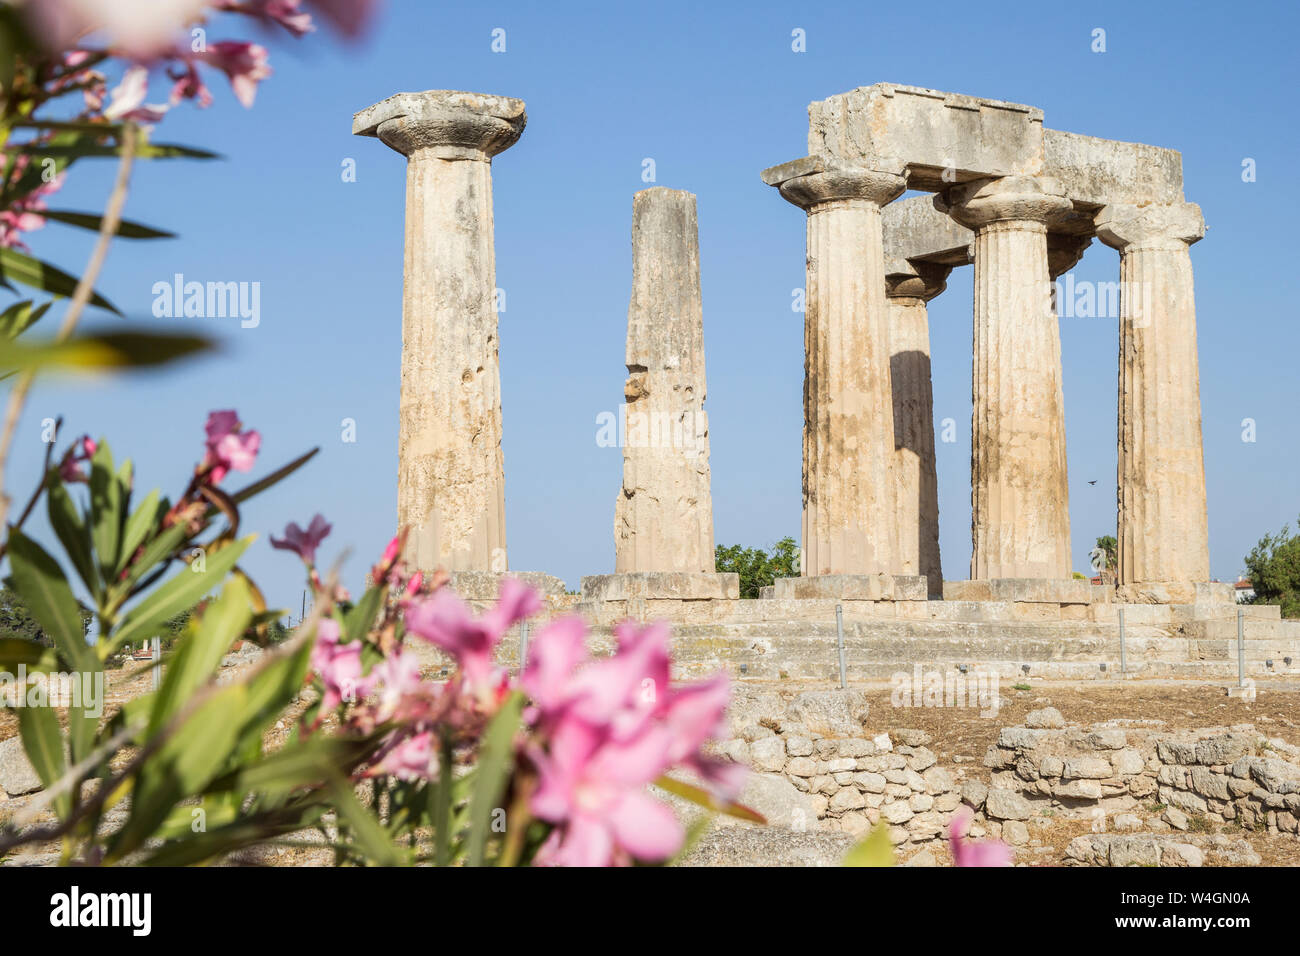 Archaic Temple of Apollo, Dorian columns, Corinth, Greece Stock Photo